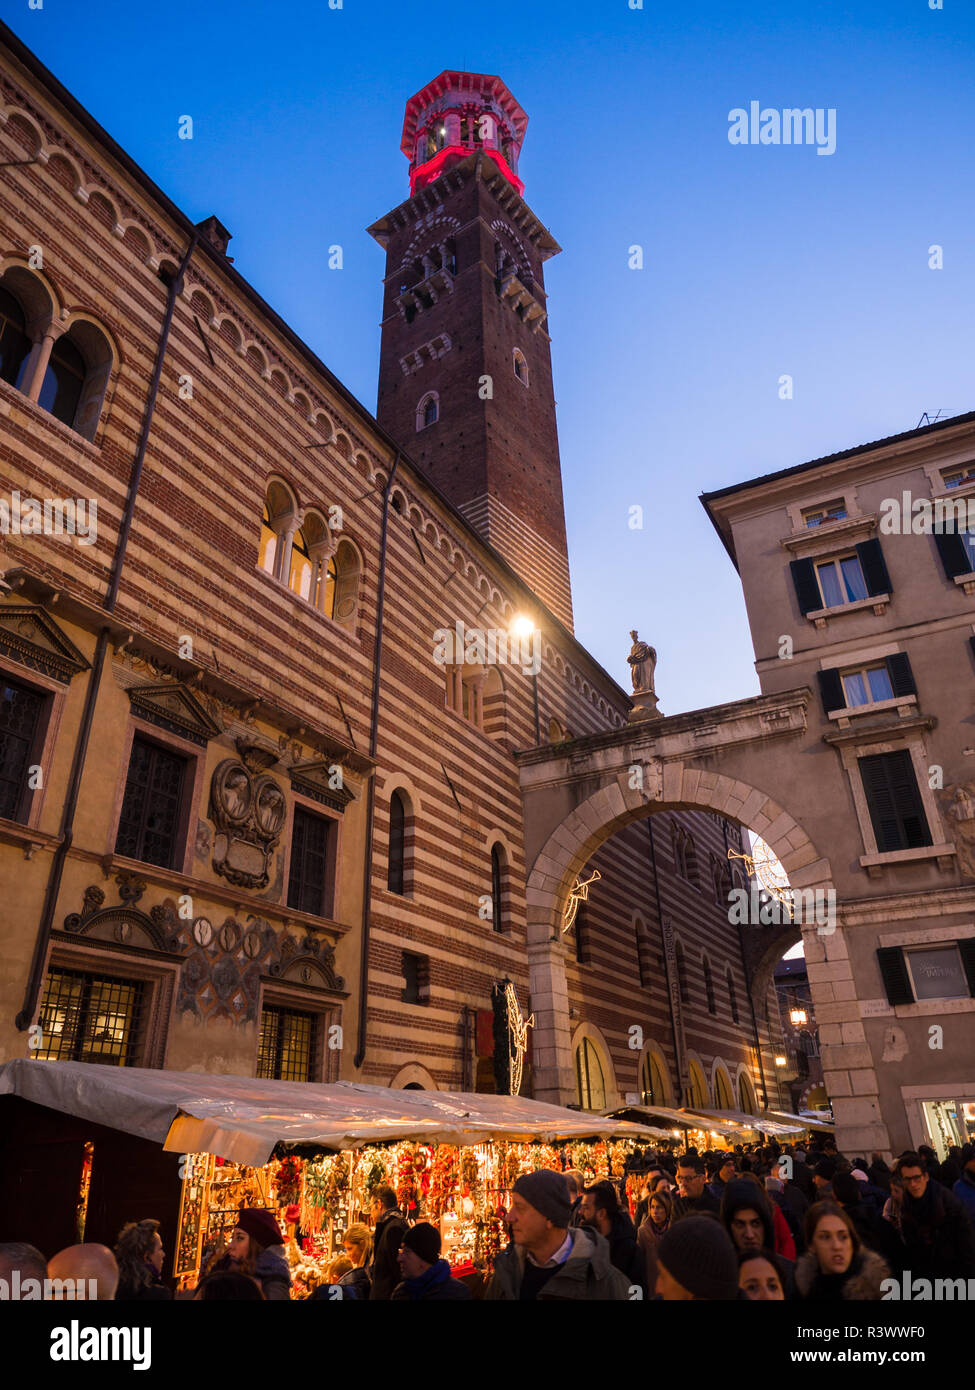 Verona, Italy - November 18, 2018: Piazza dei Signori during the Christmas markets. Stock Photo